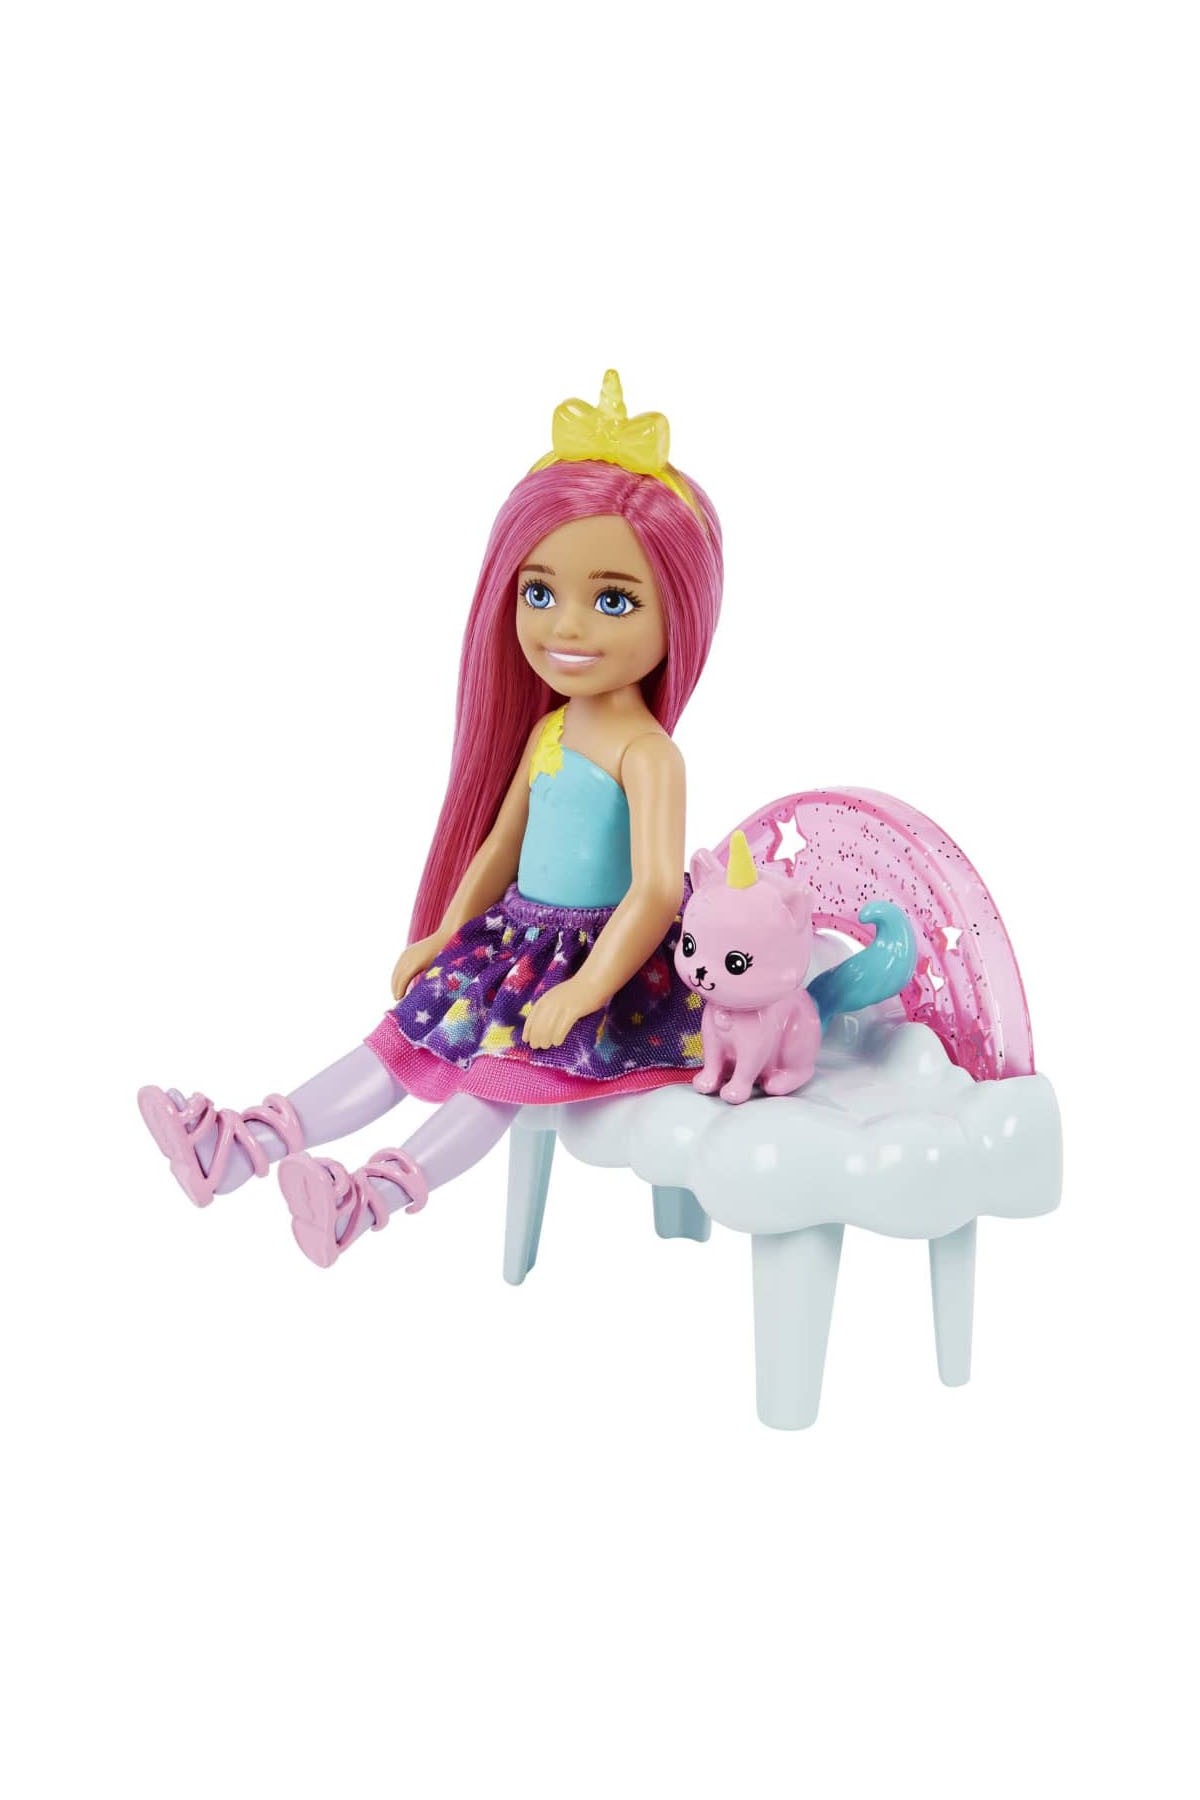 Barbie Dreamtopia Chelsea Oyun Alanı